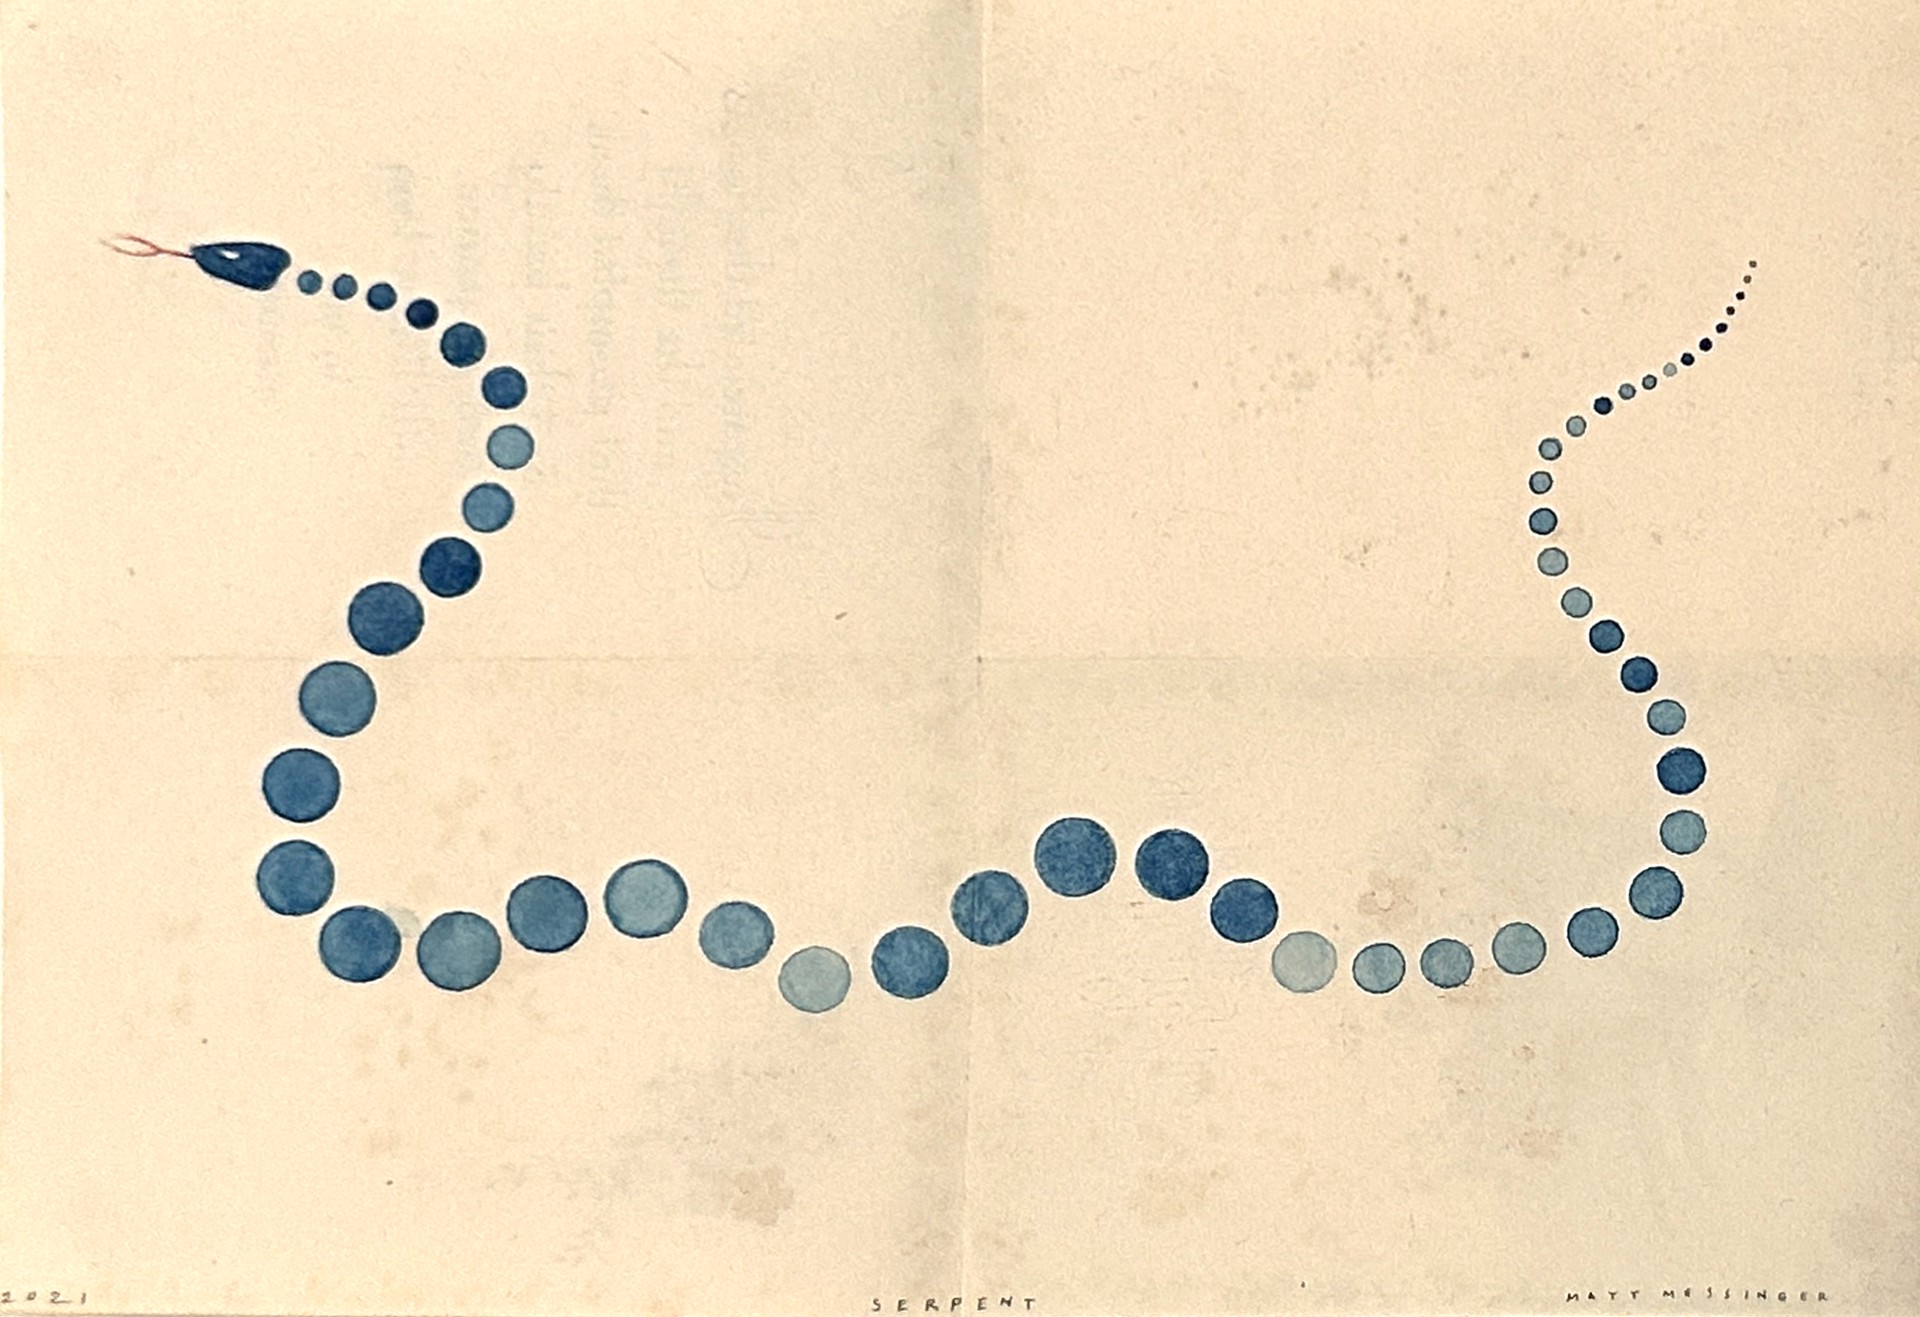 Serpent by Matt Messinger - Works on Paper